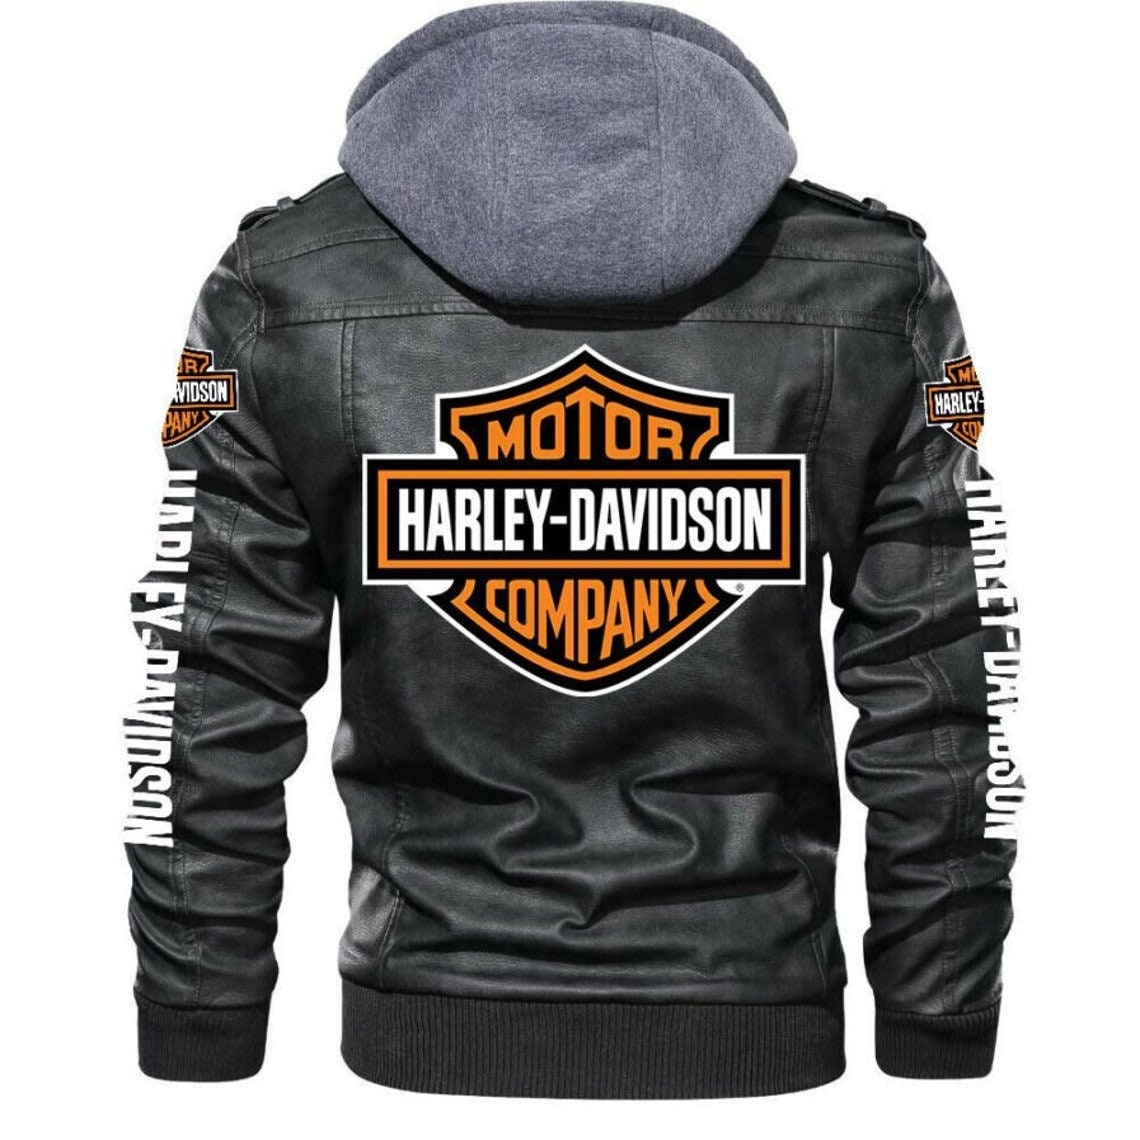 Harley Davidson Motorcycle Leather Jacke Men's Black - Etsy